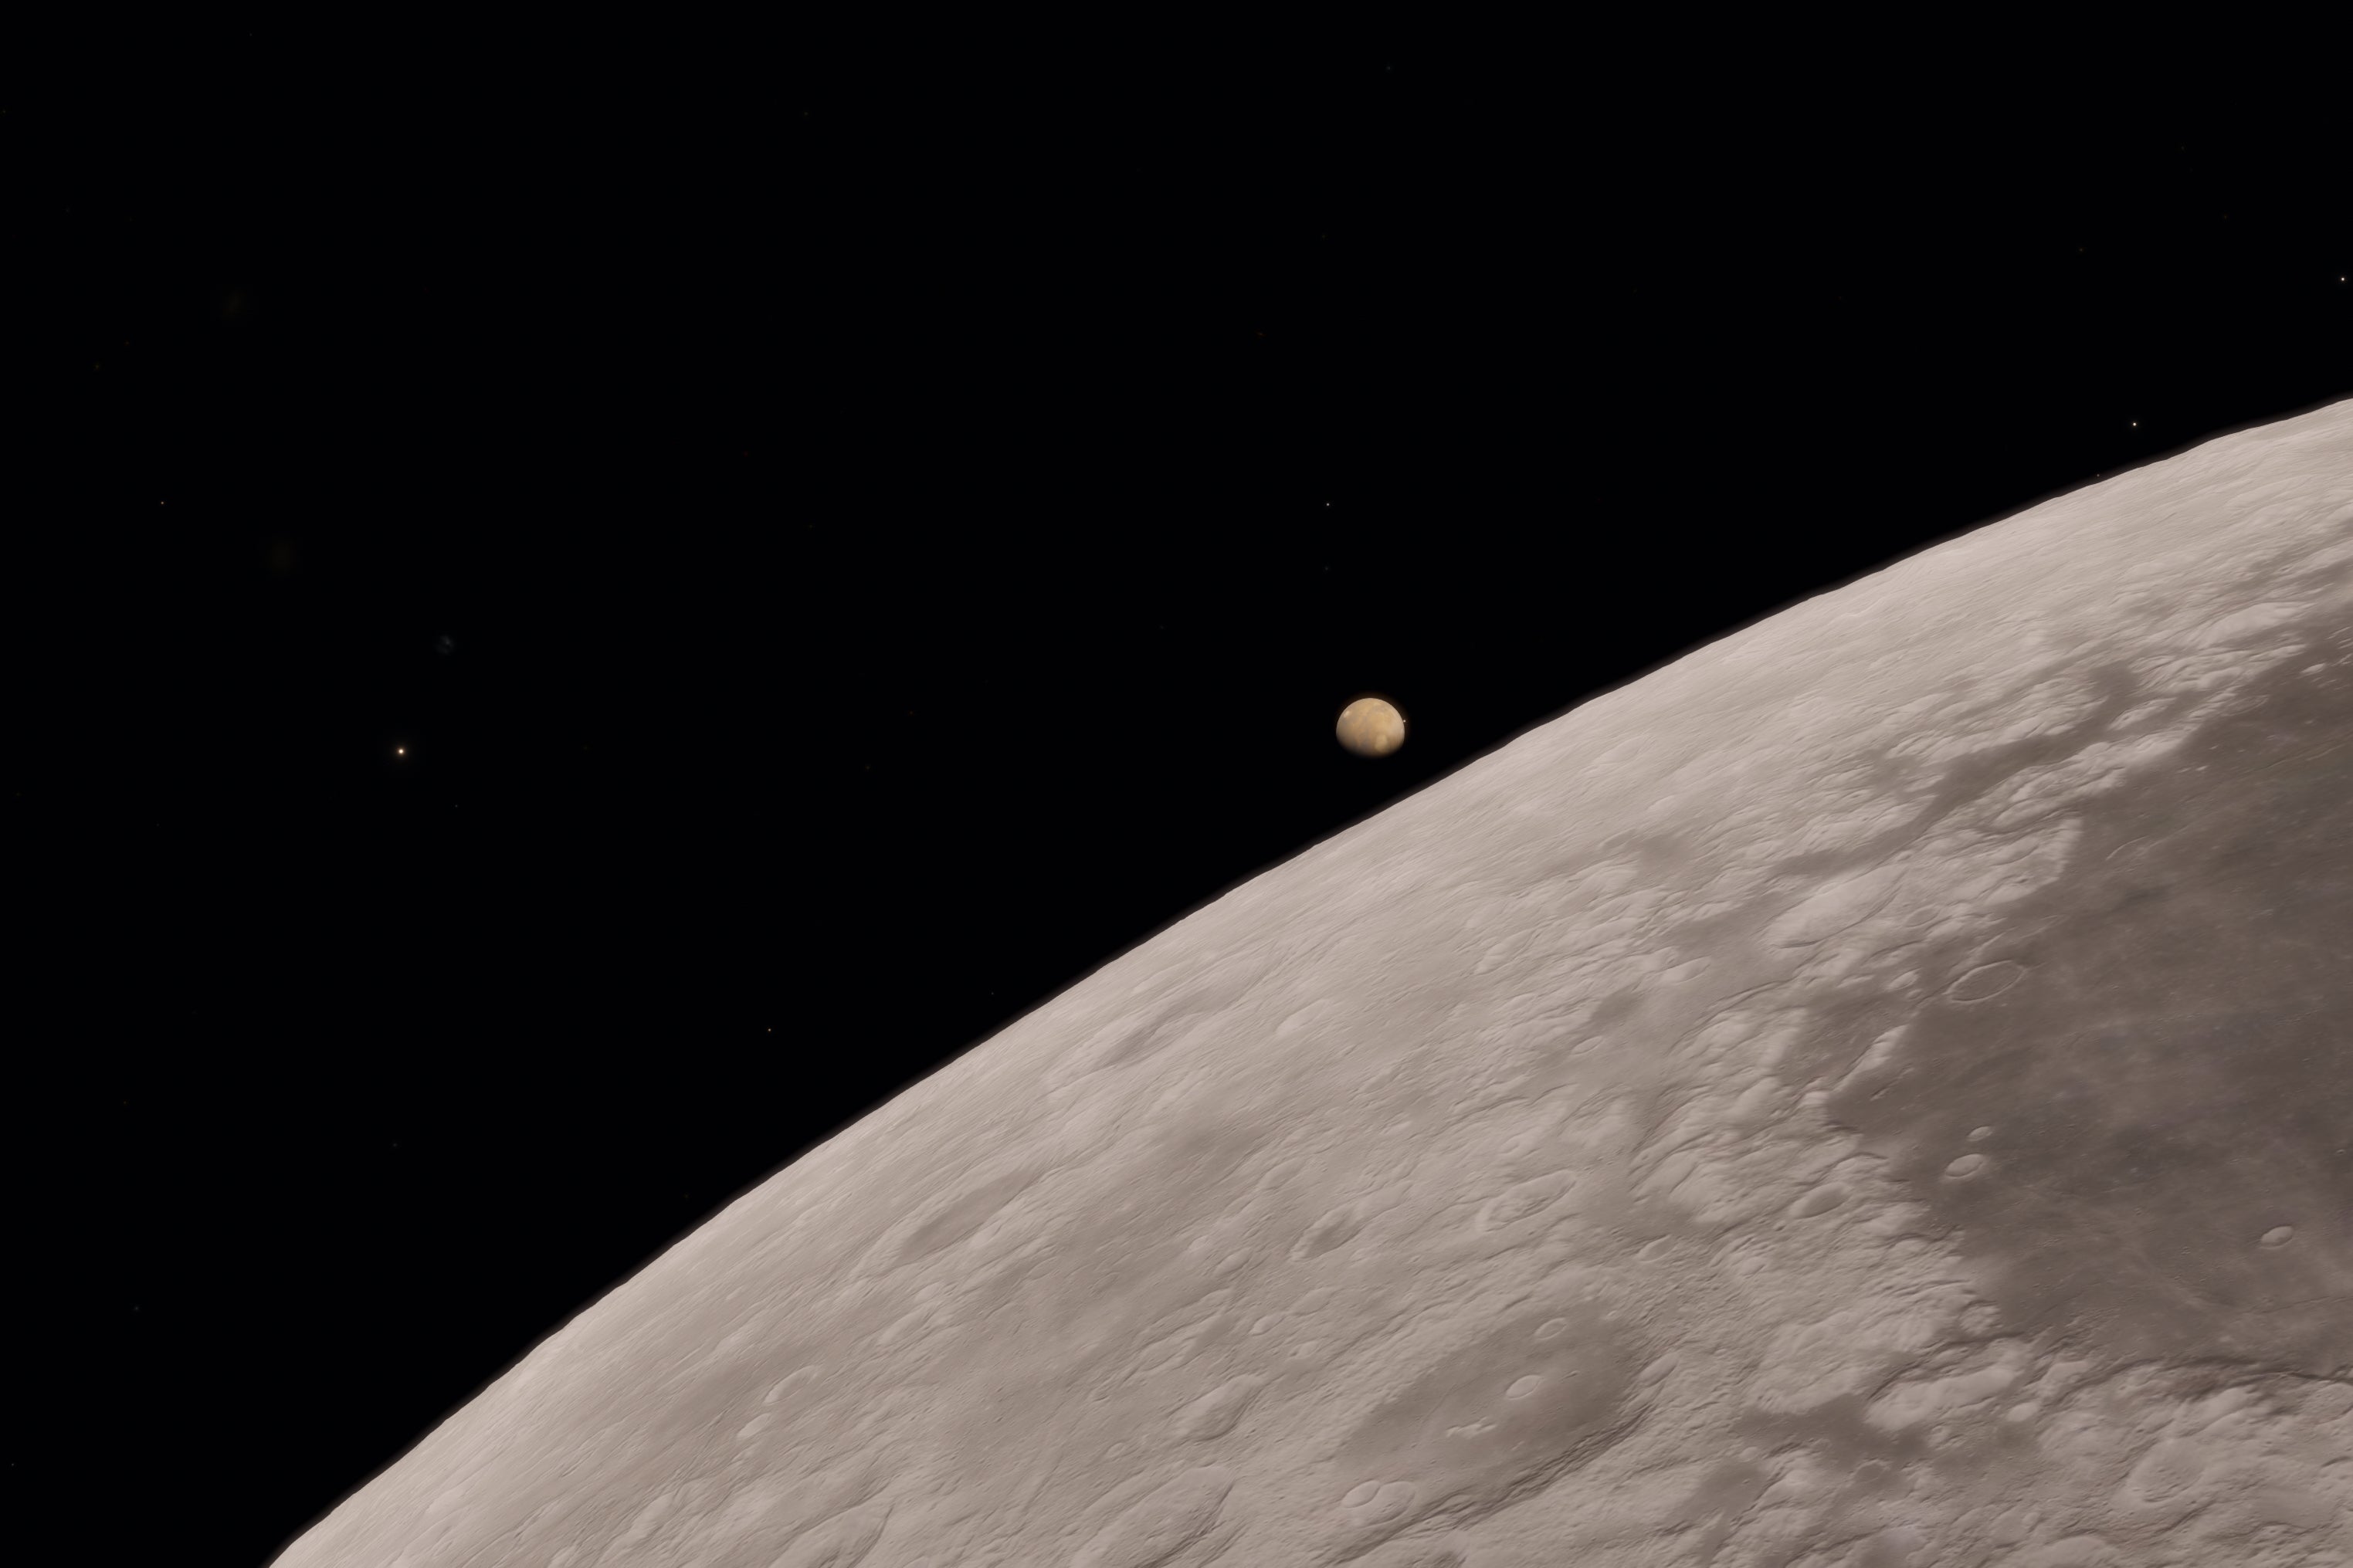 mars moon from mars surface